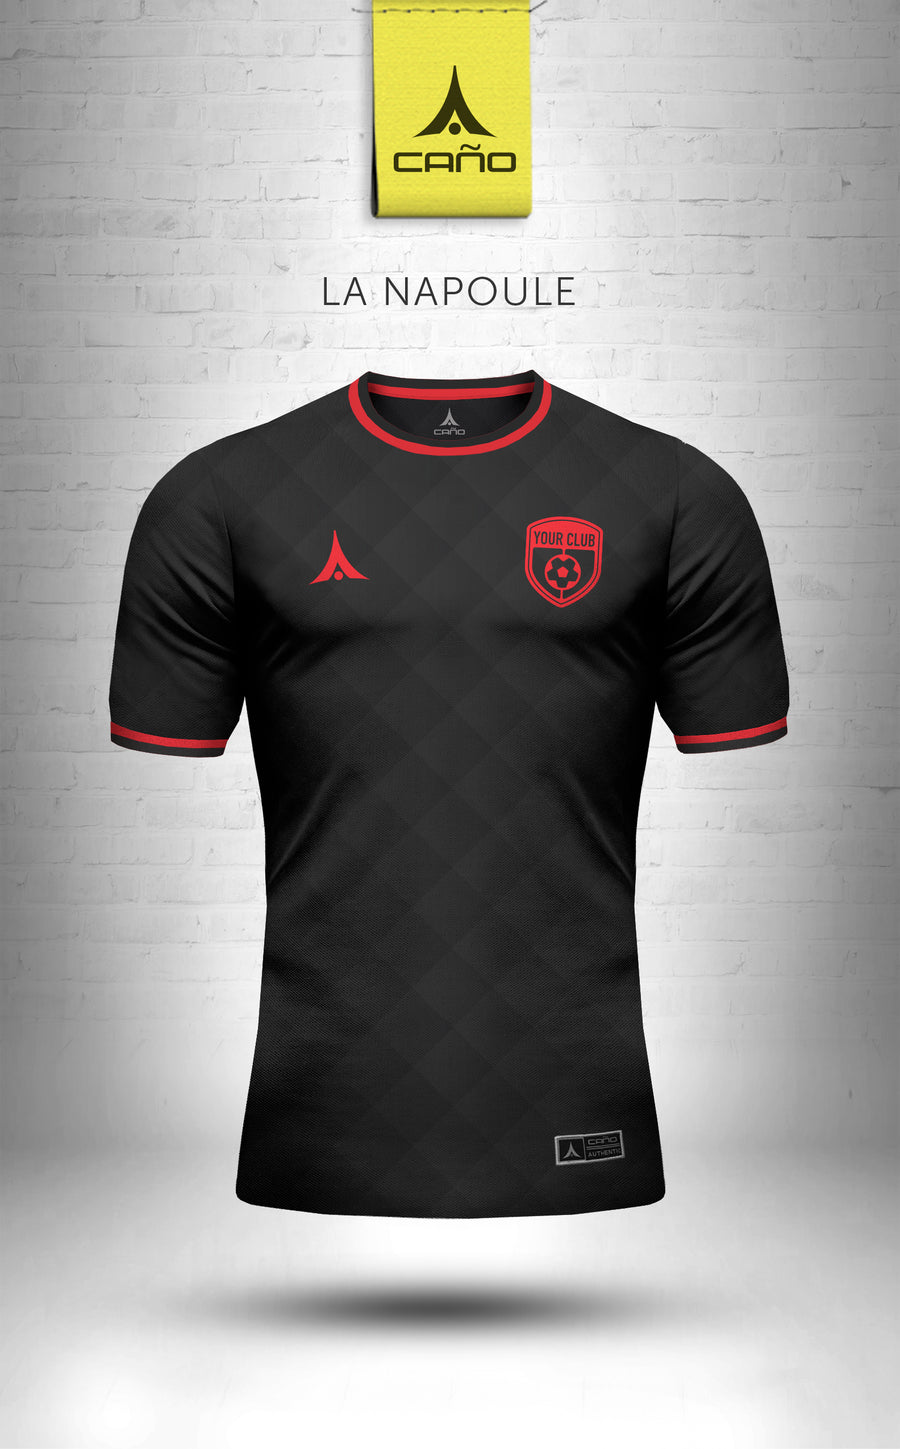 La Napoule in black/red